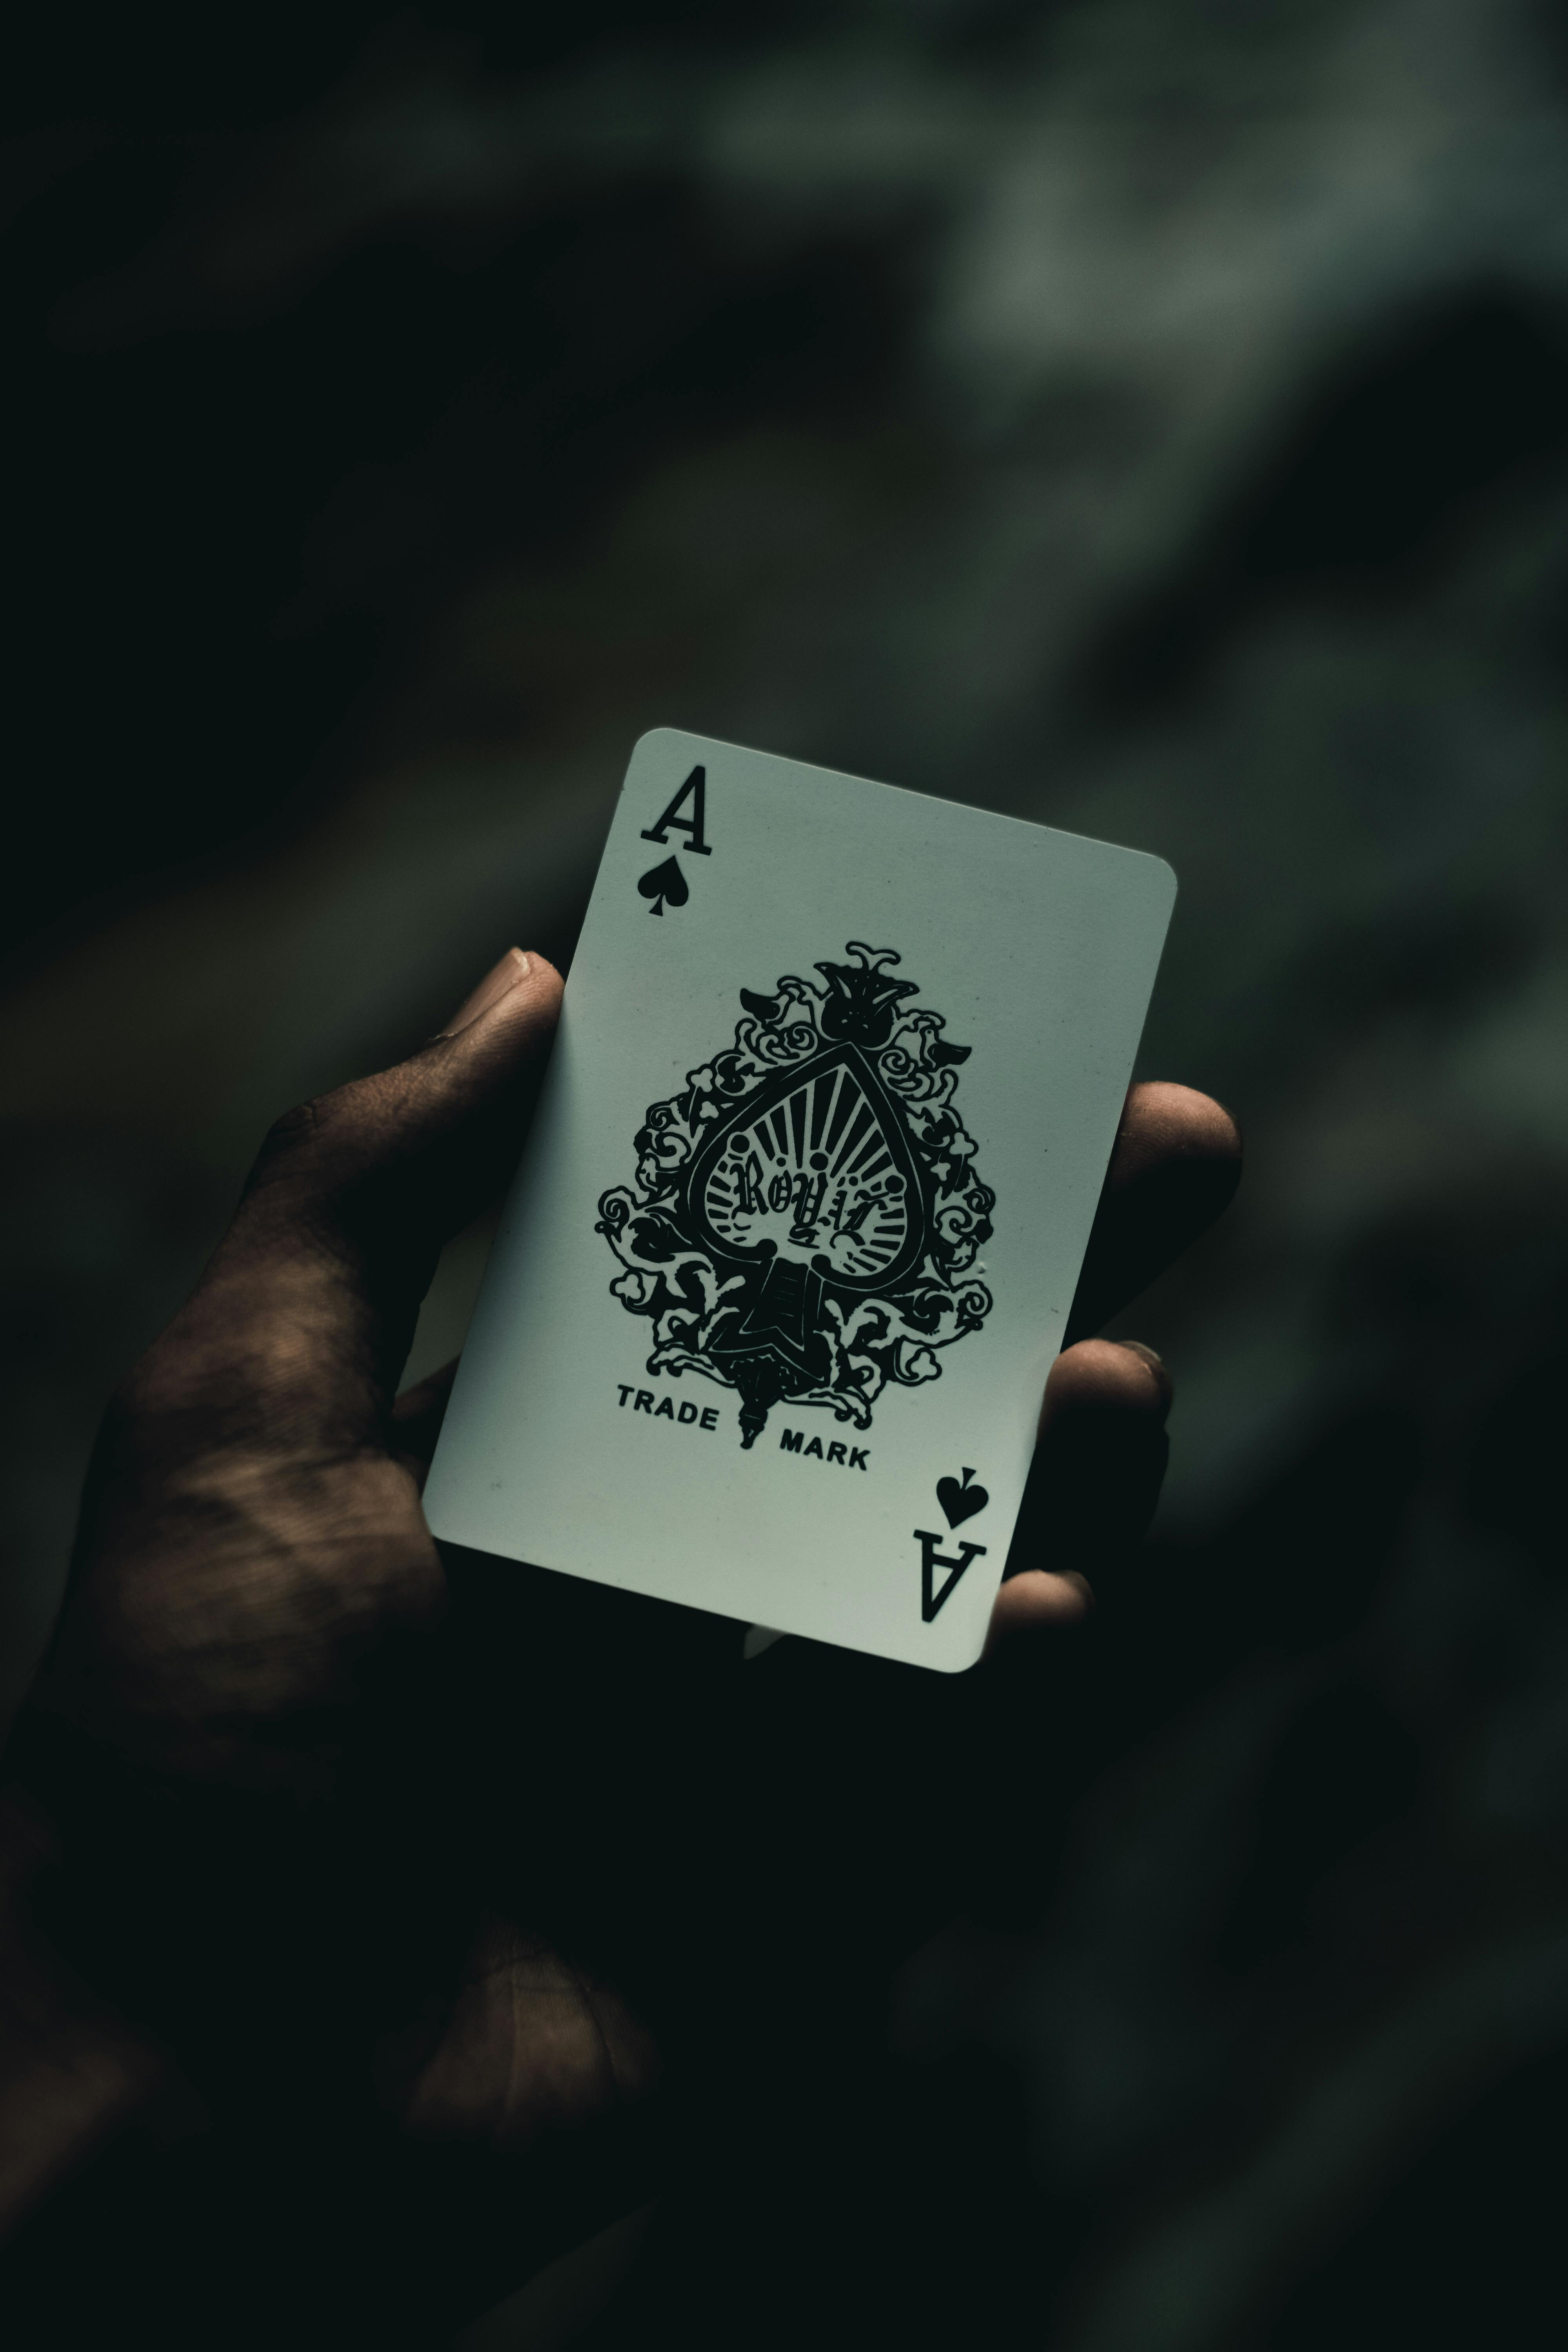 50+ Free Ace Of Spades & Poker Images - Pixabay